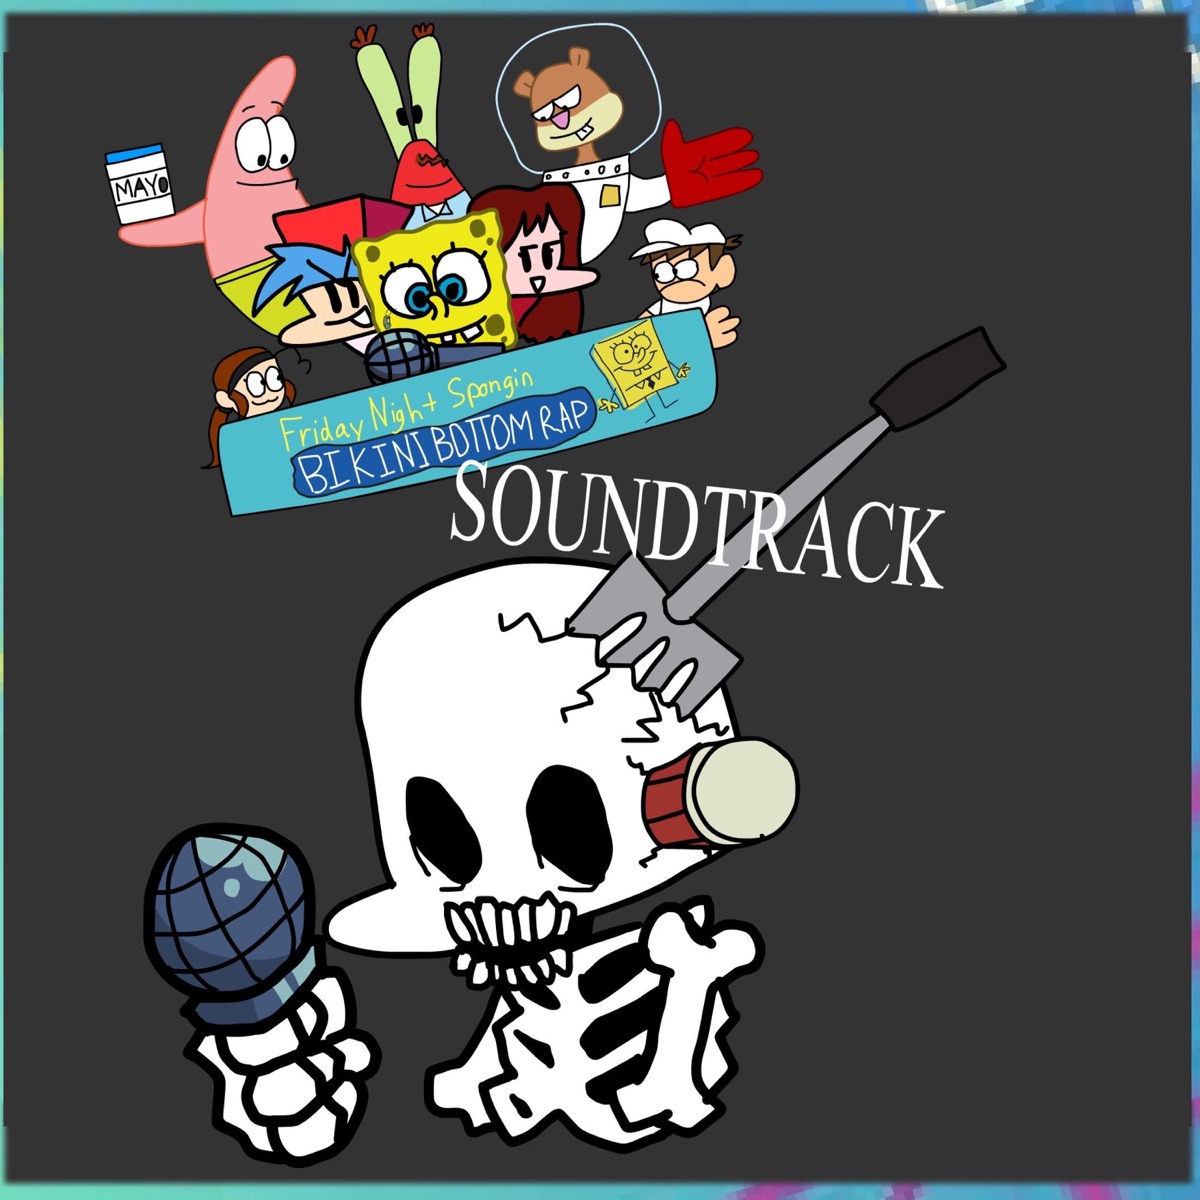 Friday Night Spongin' Bikini Bottom Rap Battles Original Soundtrack, Vol. 2  - Album by Spunchbop Team - Apple Music